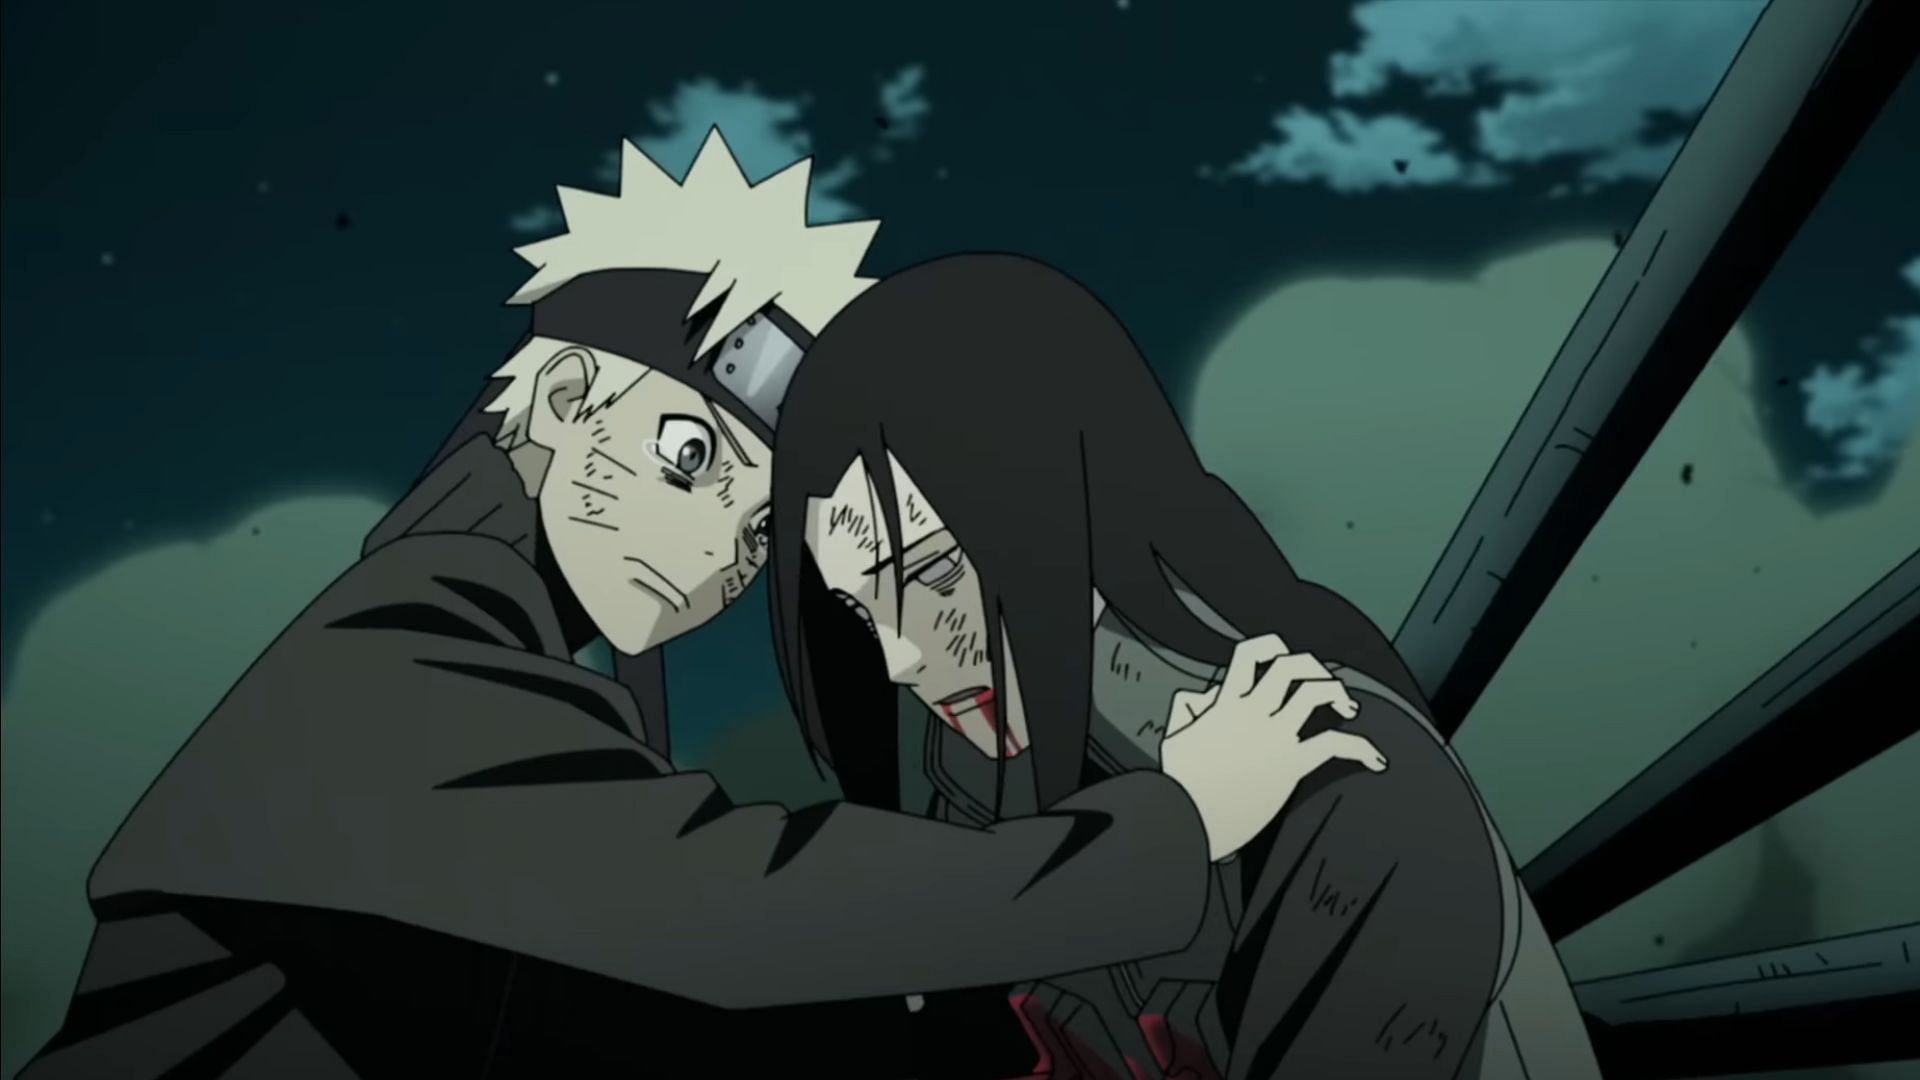 Naruto and Neji in the PV (Image via Studio Pierrot)